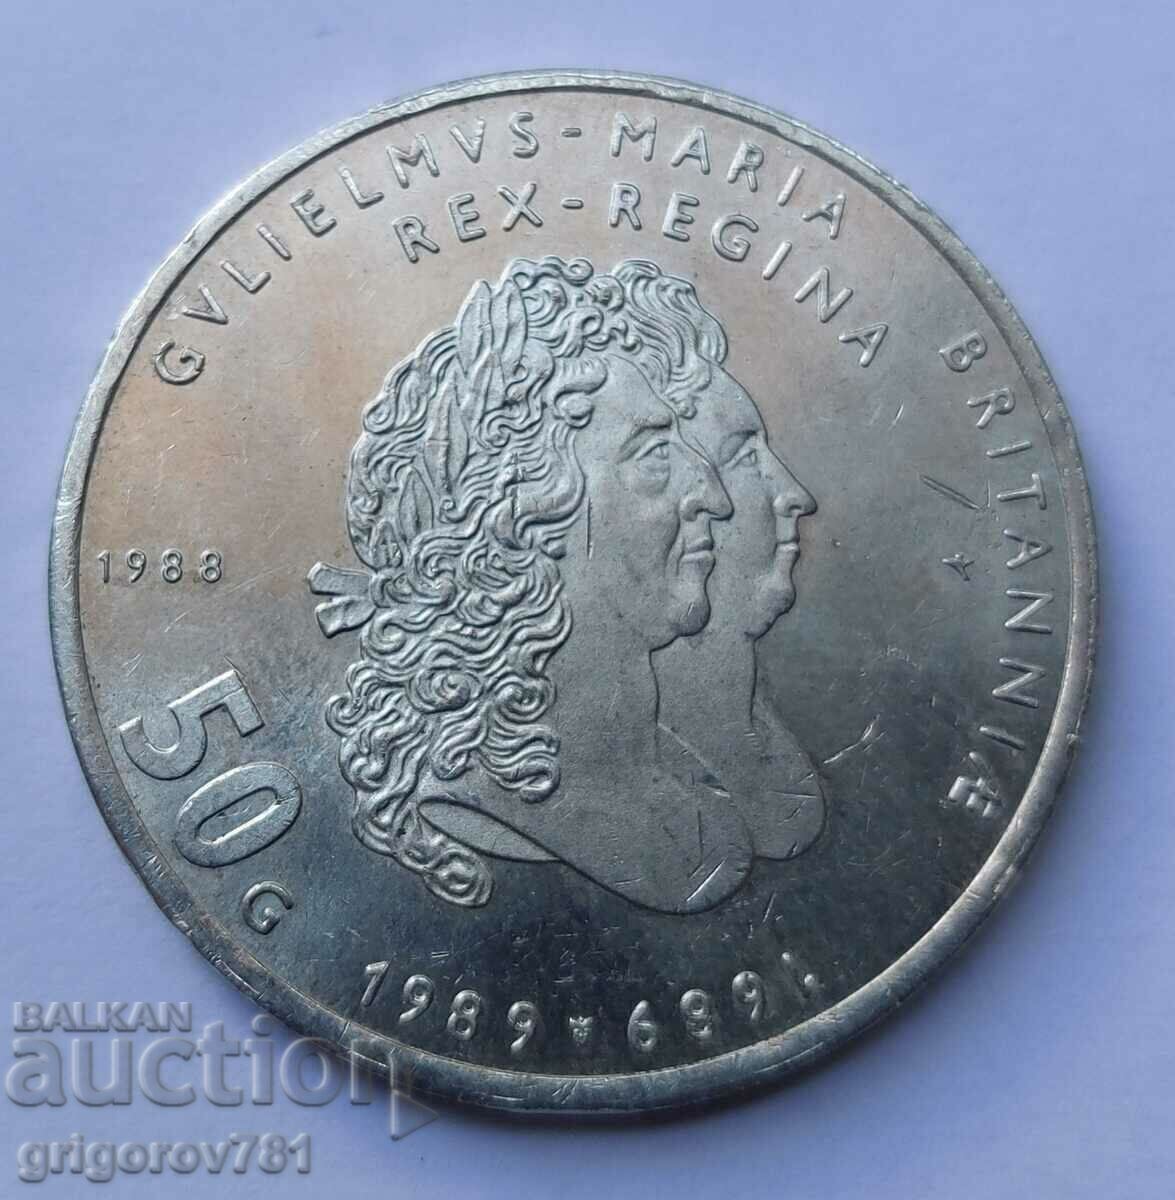 50 Guilder Silver Netherlands 1988 - Silver Coin #3